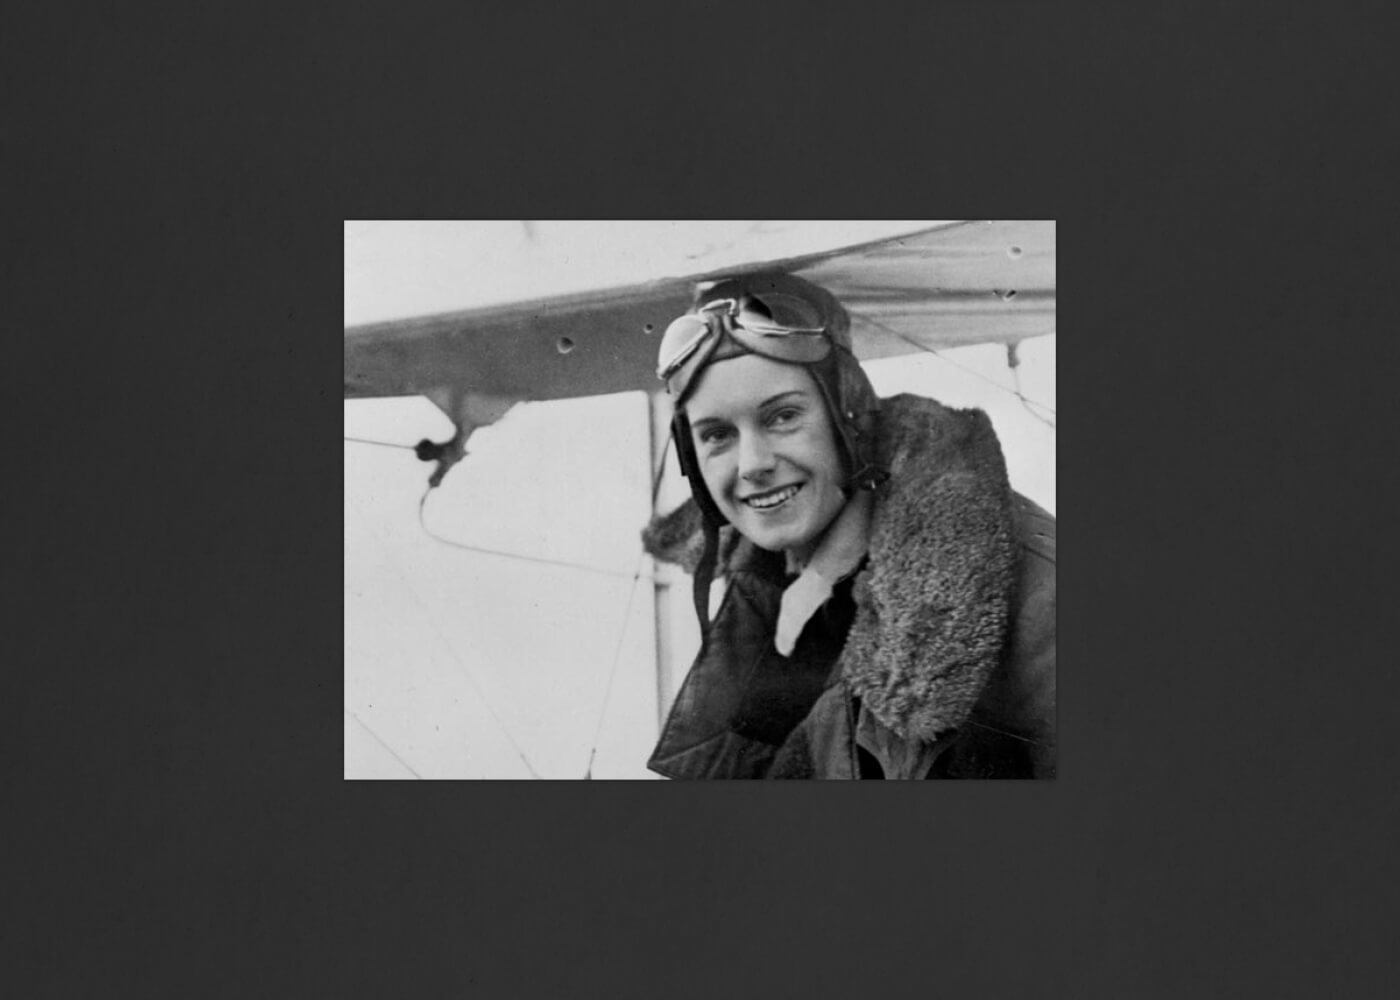 New digital exhibition on Jean Batten, NZ’s greatest aviator